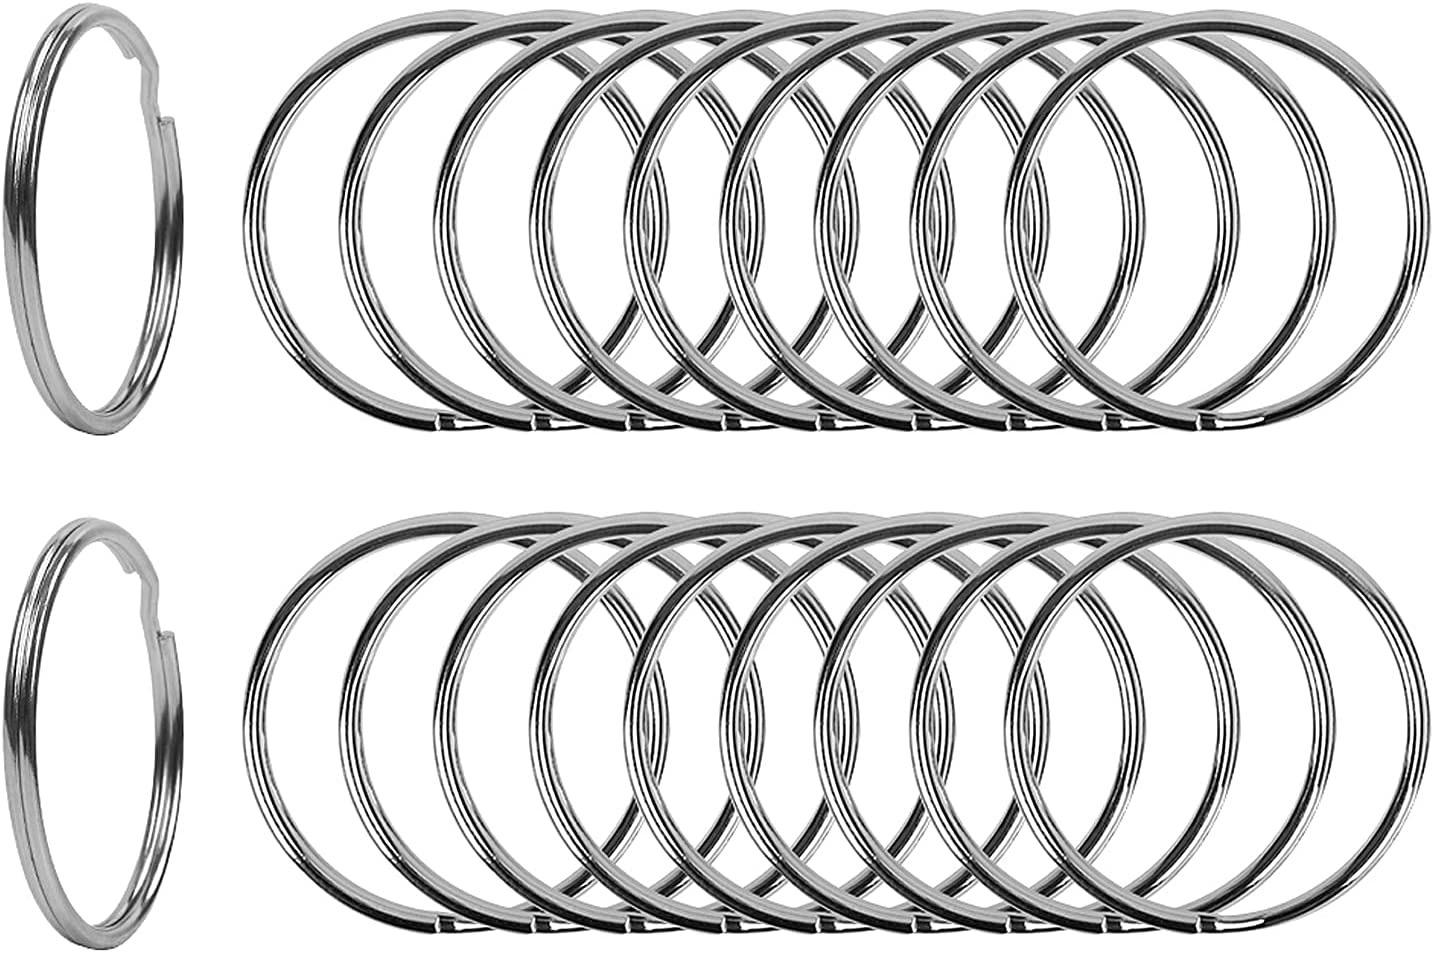 2 Inch Flat Key Rings - Large Split Key Rings - Silver Steel Round Edged Circ...